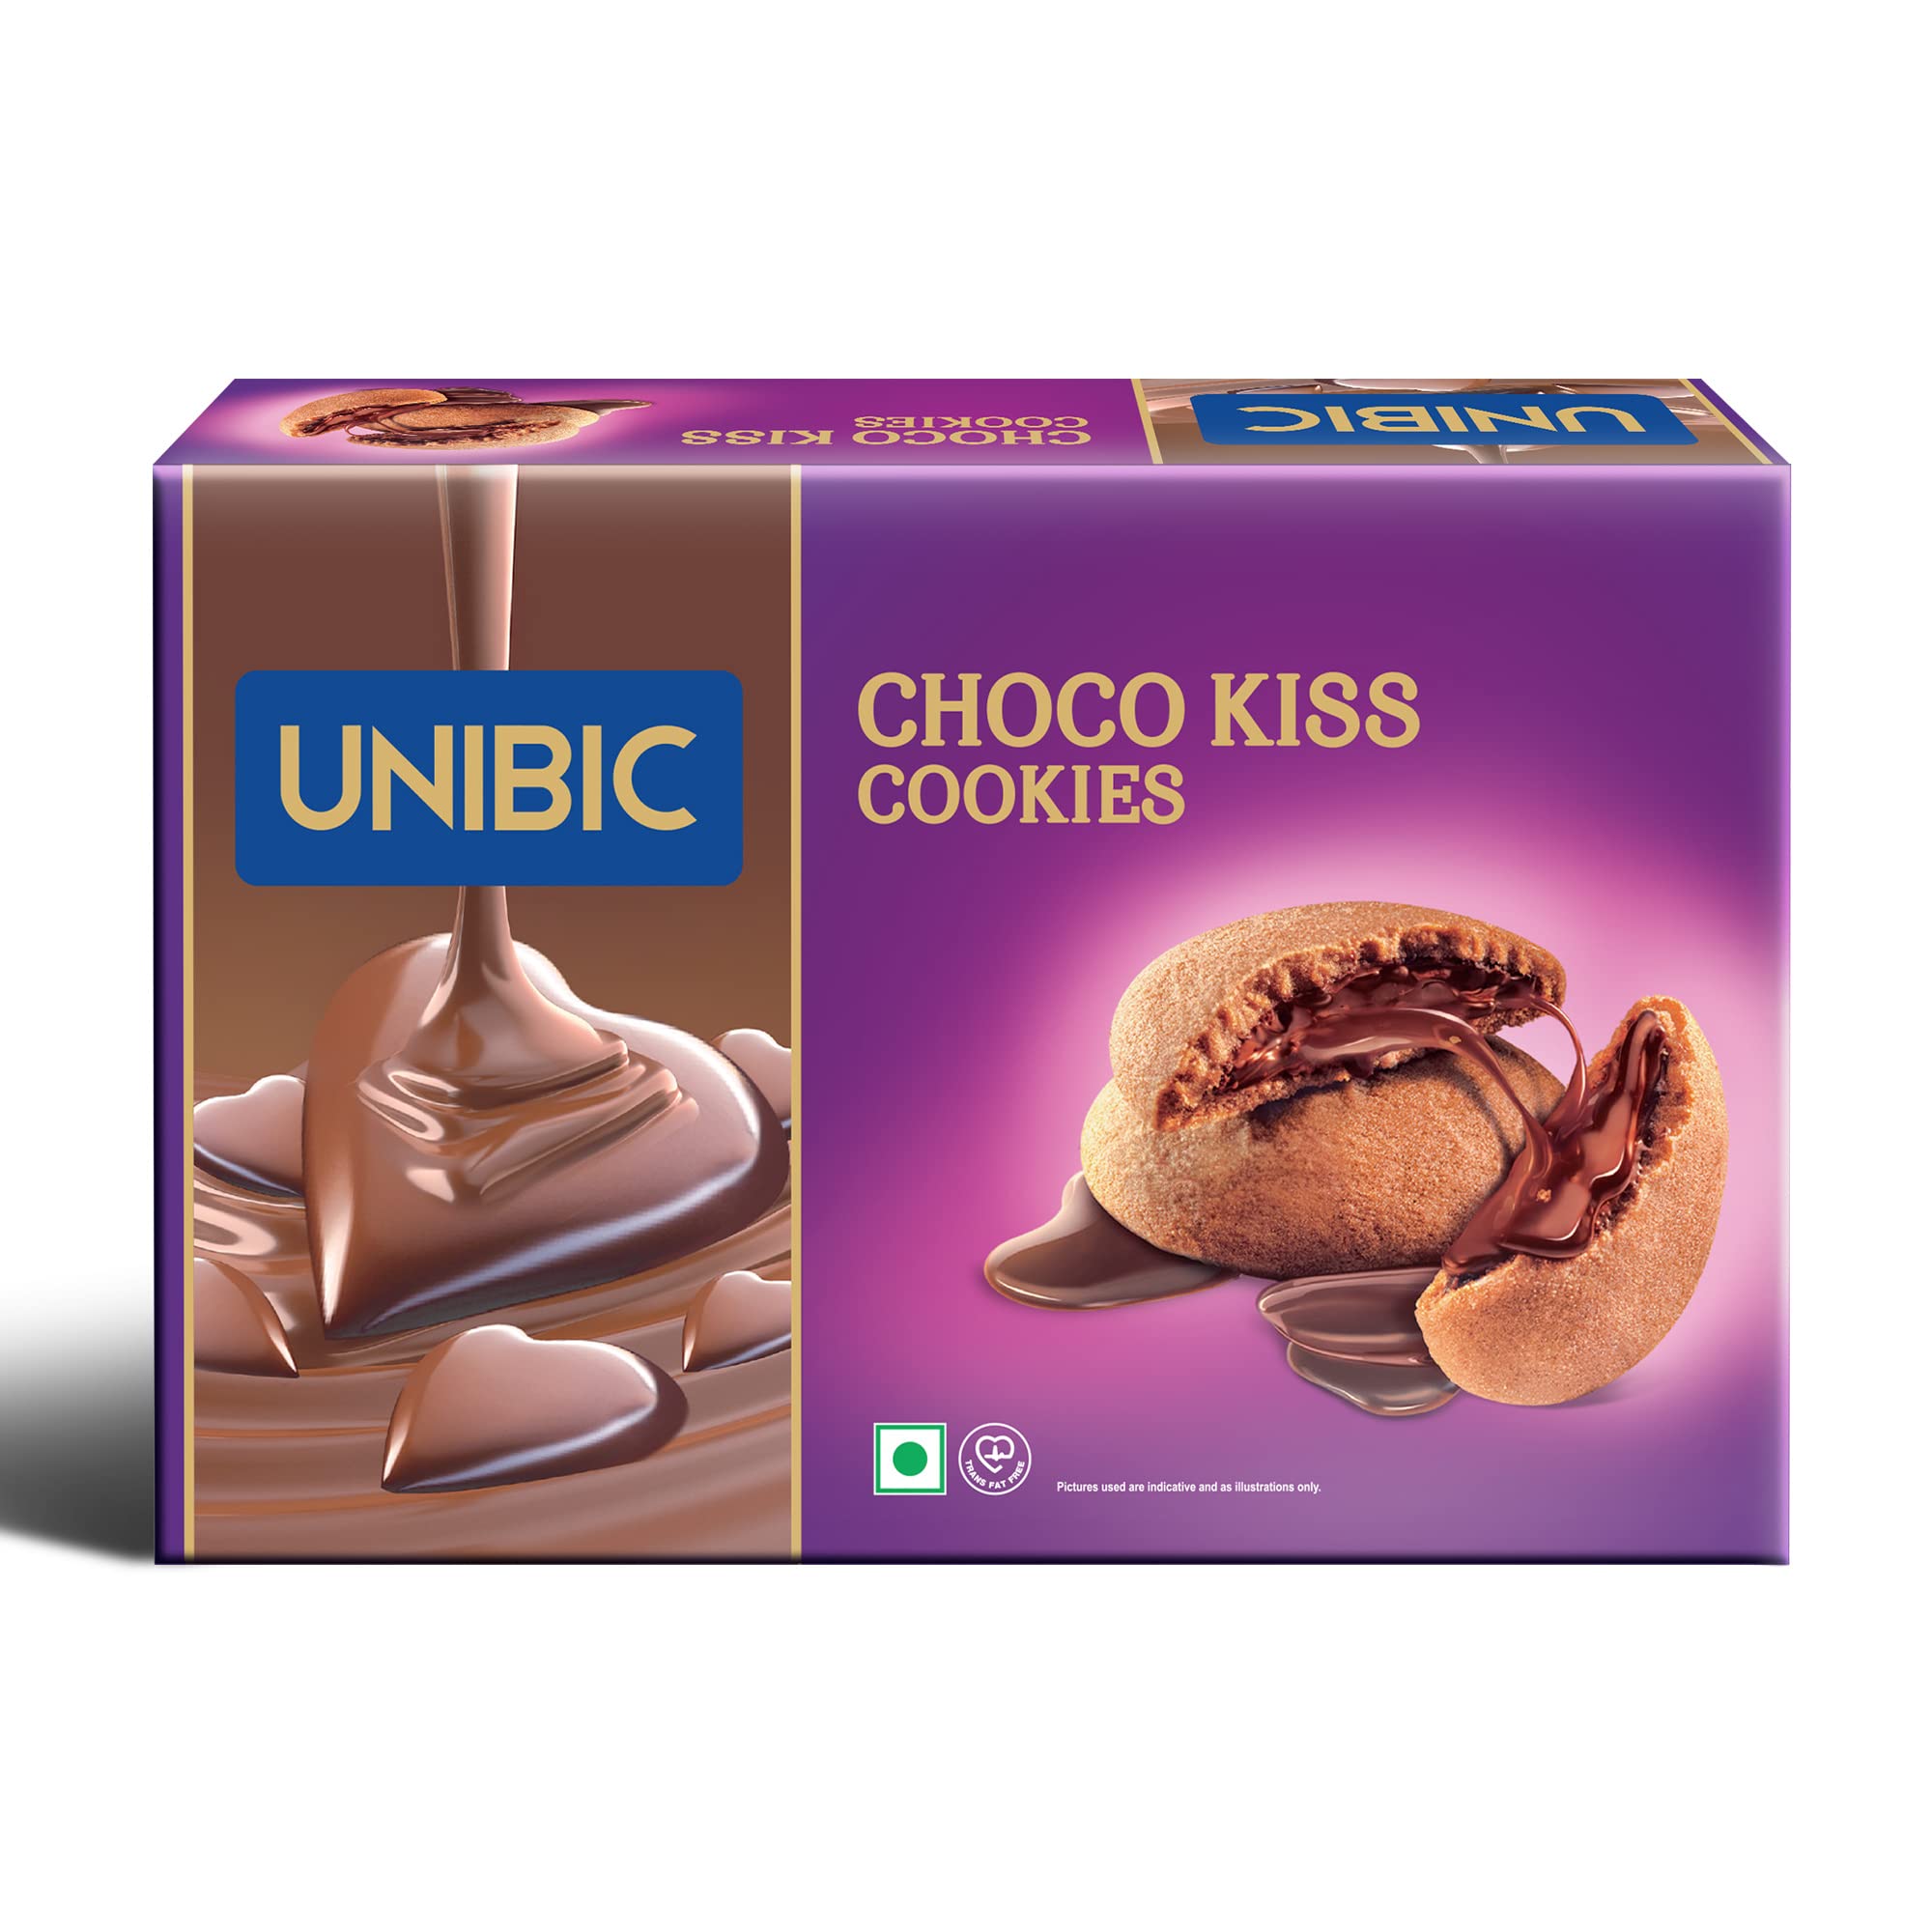 Unibic Foods India Pvt LTD Choco Kiss Cookies